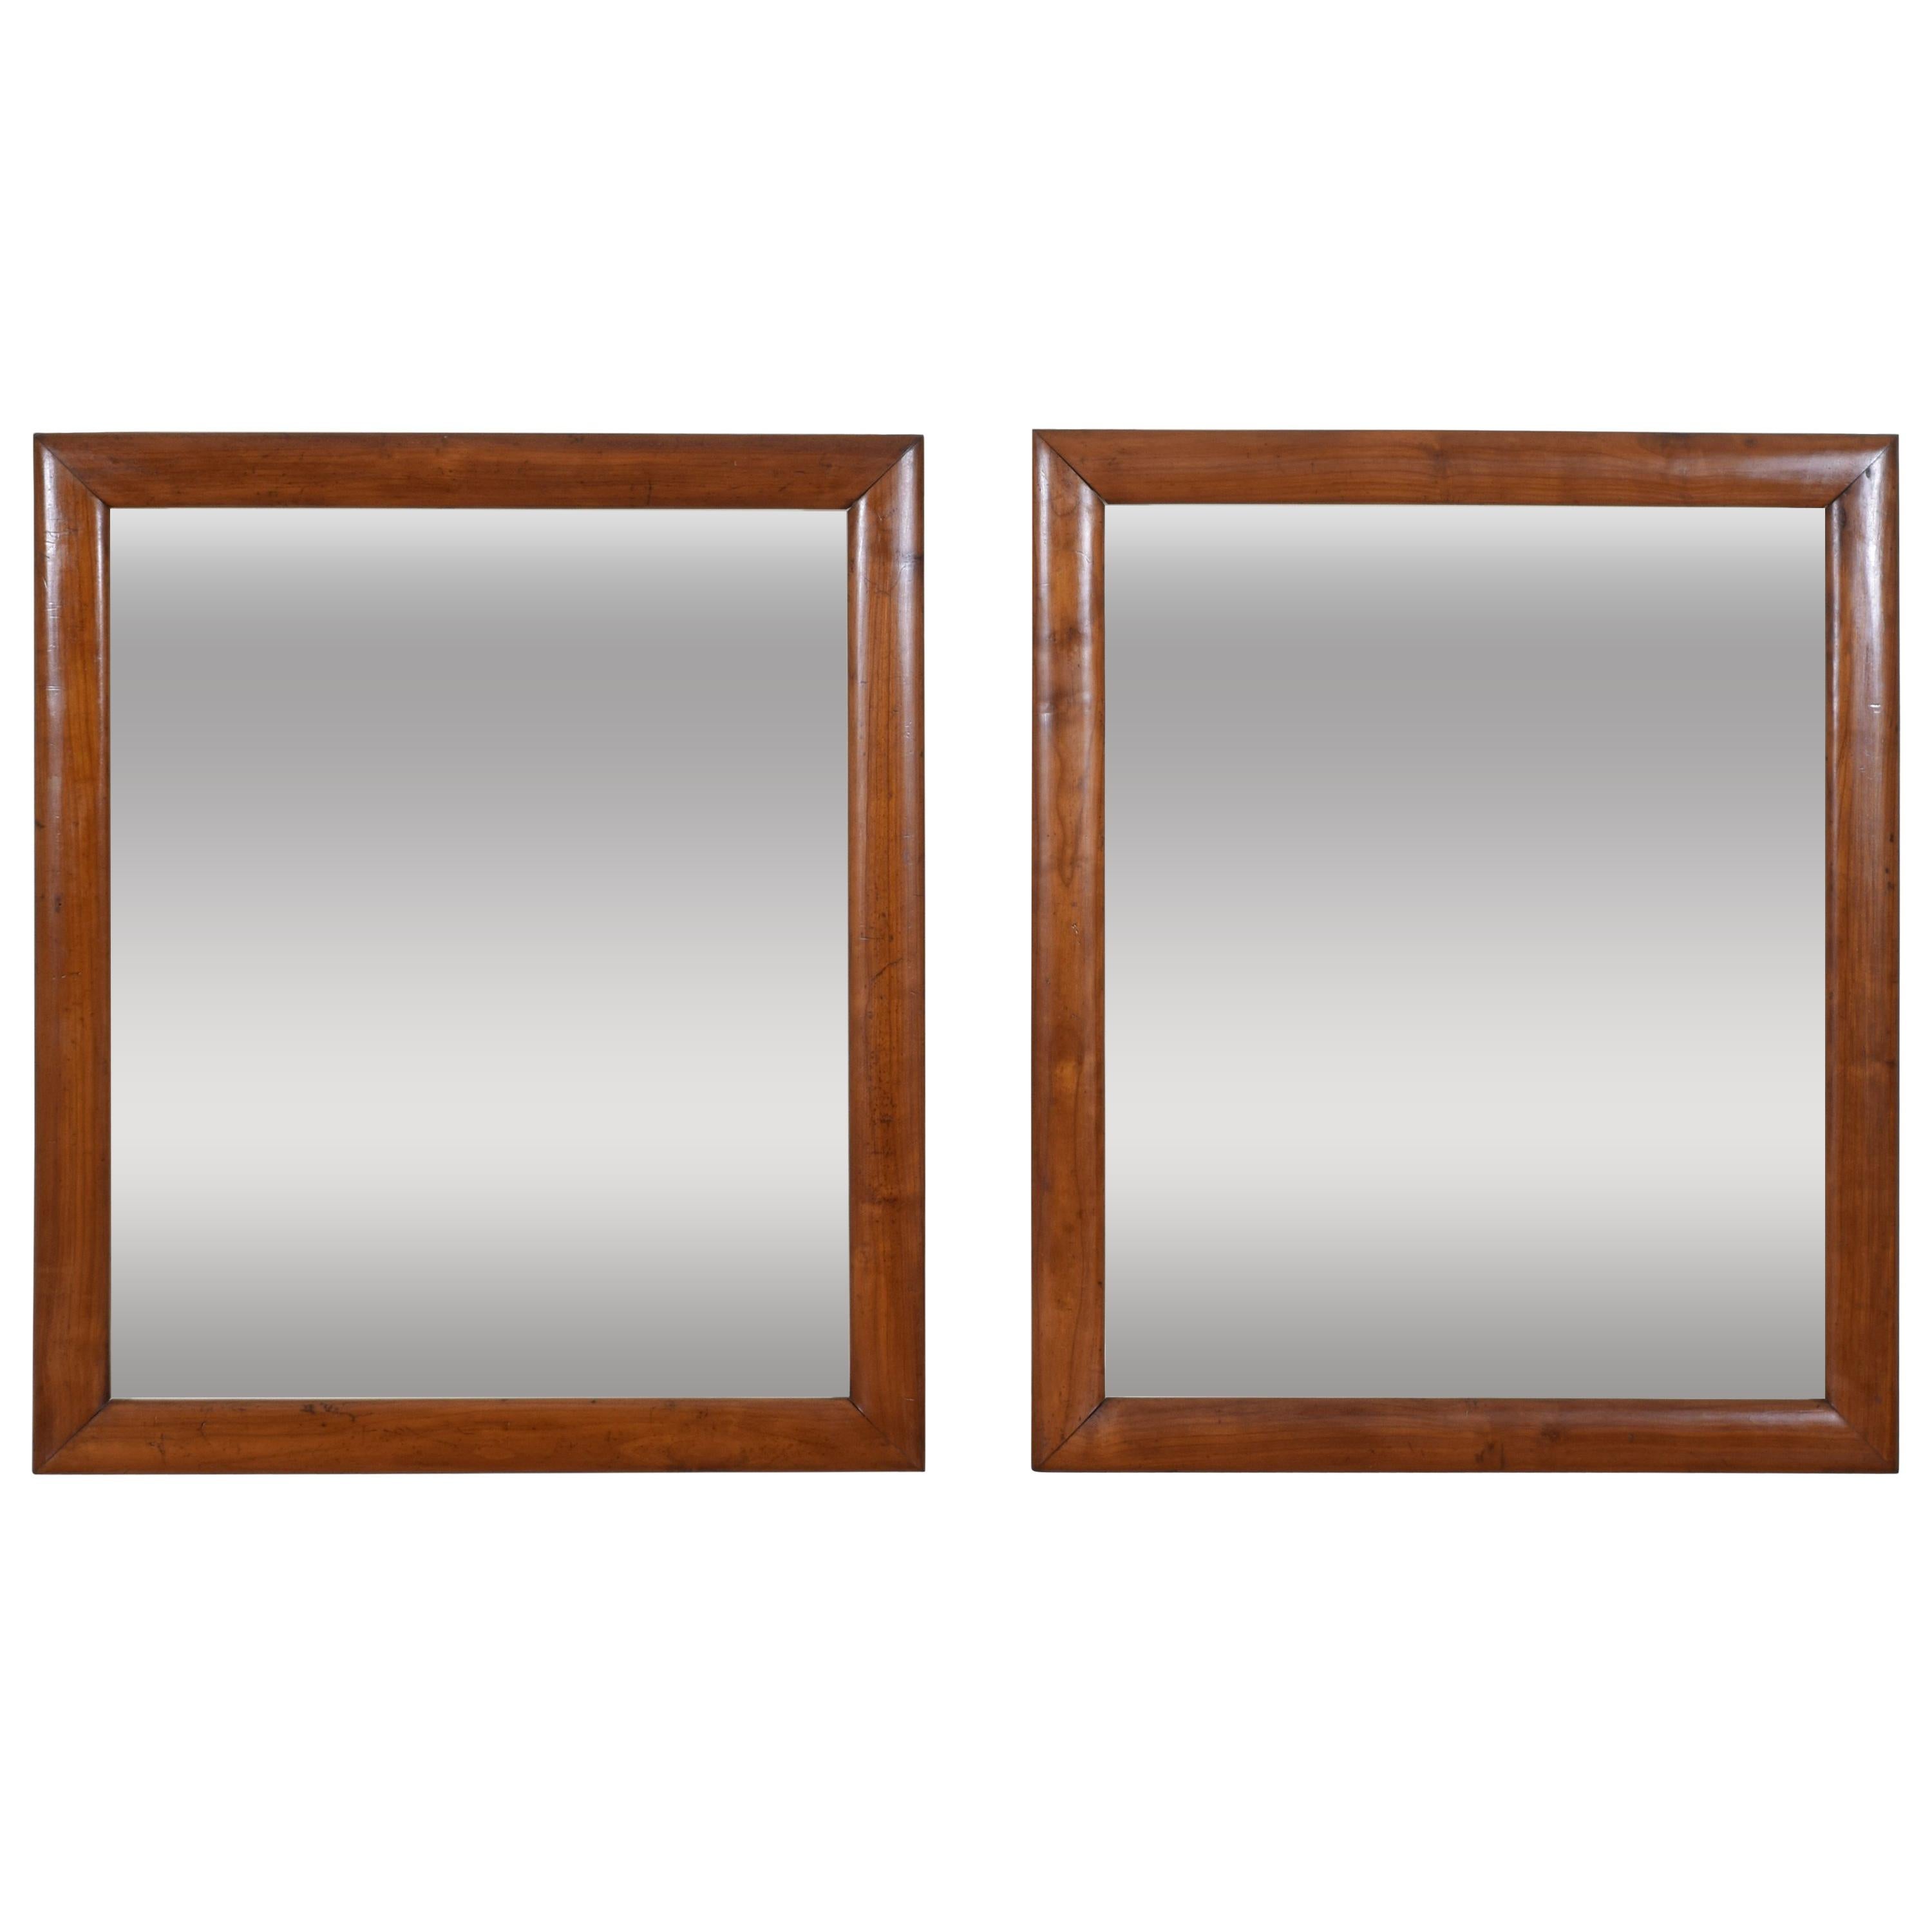 Pair of Italian Neoclassical Period Solid Walnut Mirrors